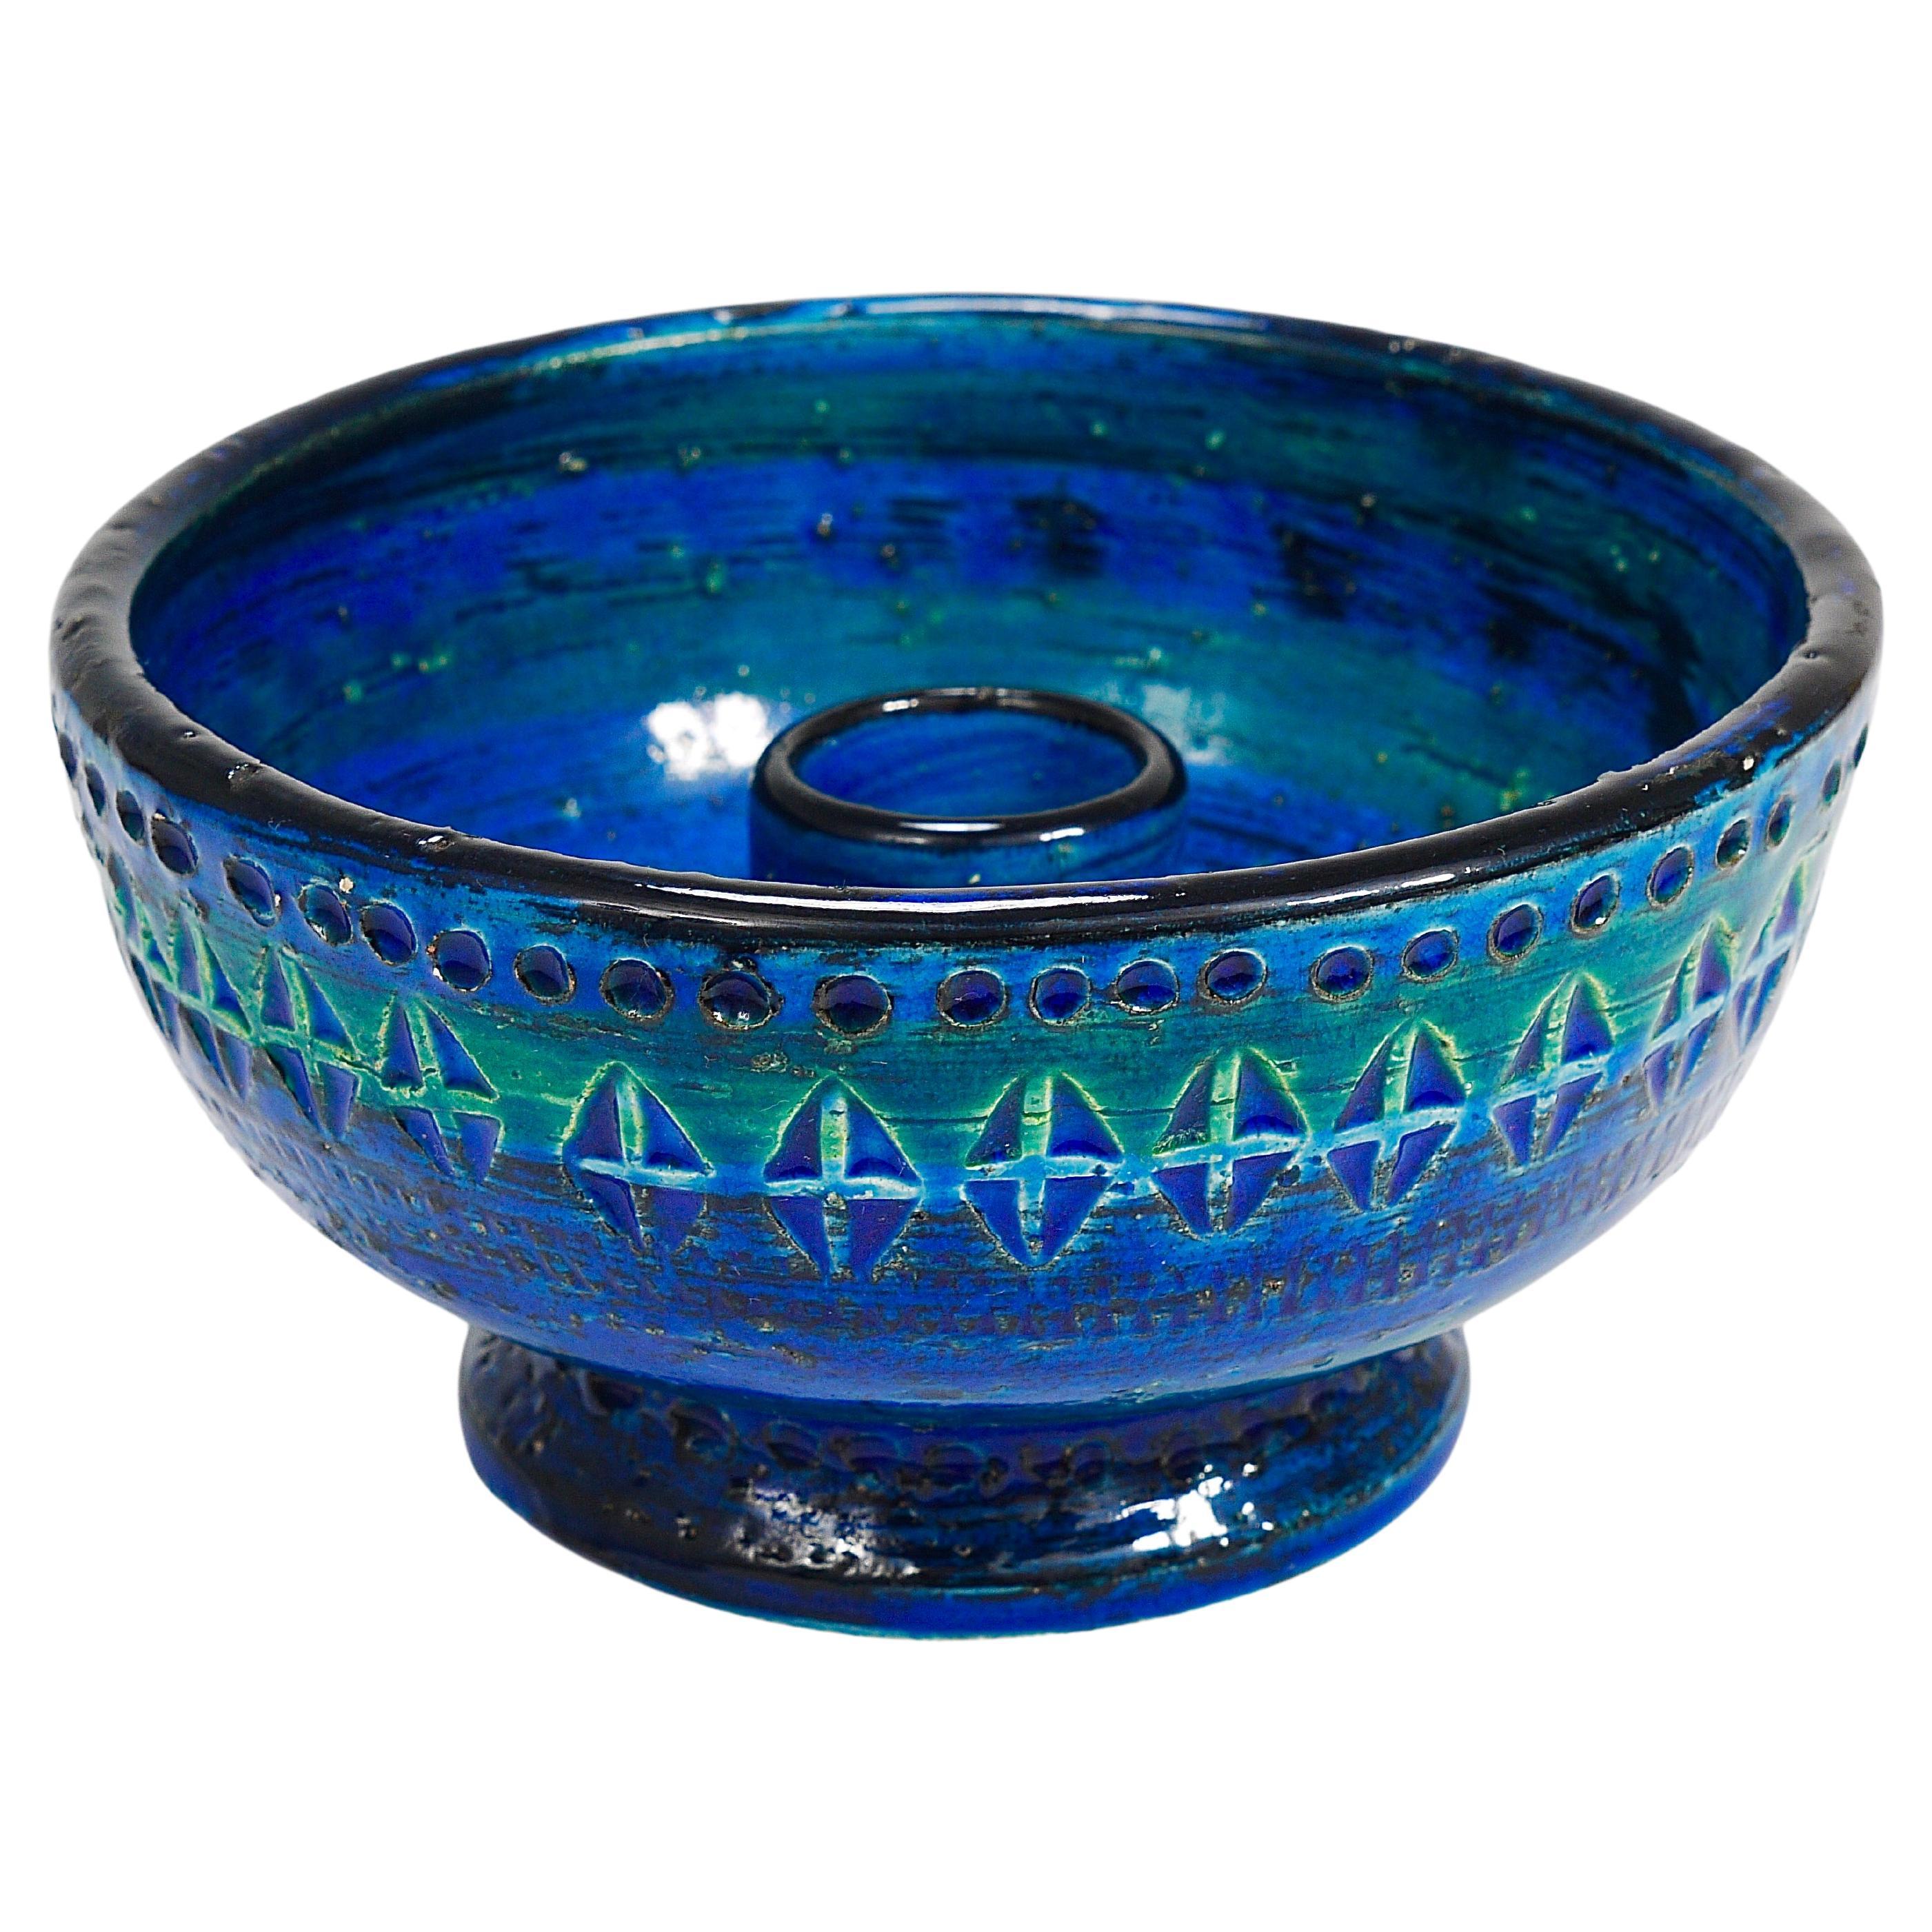 Aldo Londi Bitossi Rimini Blue Glazed Midcentury Candle Holder Bowl, 1950s For Sale